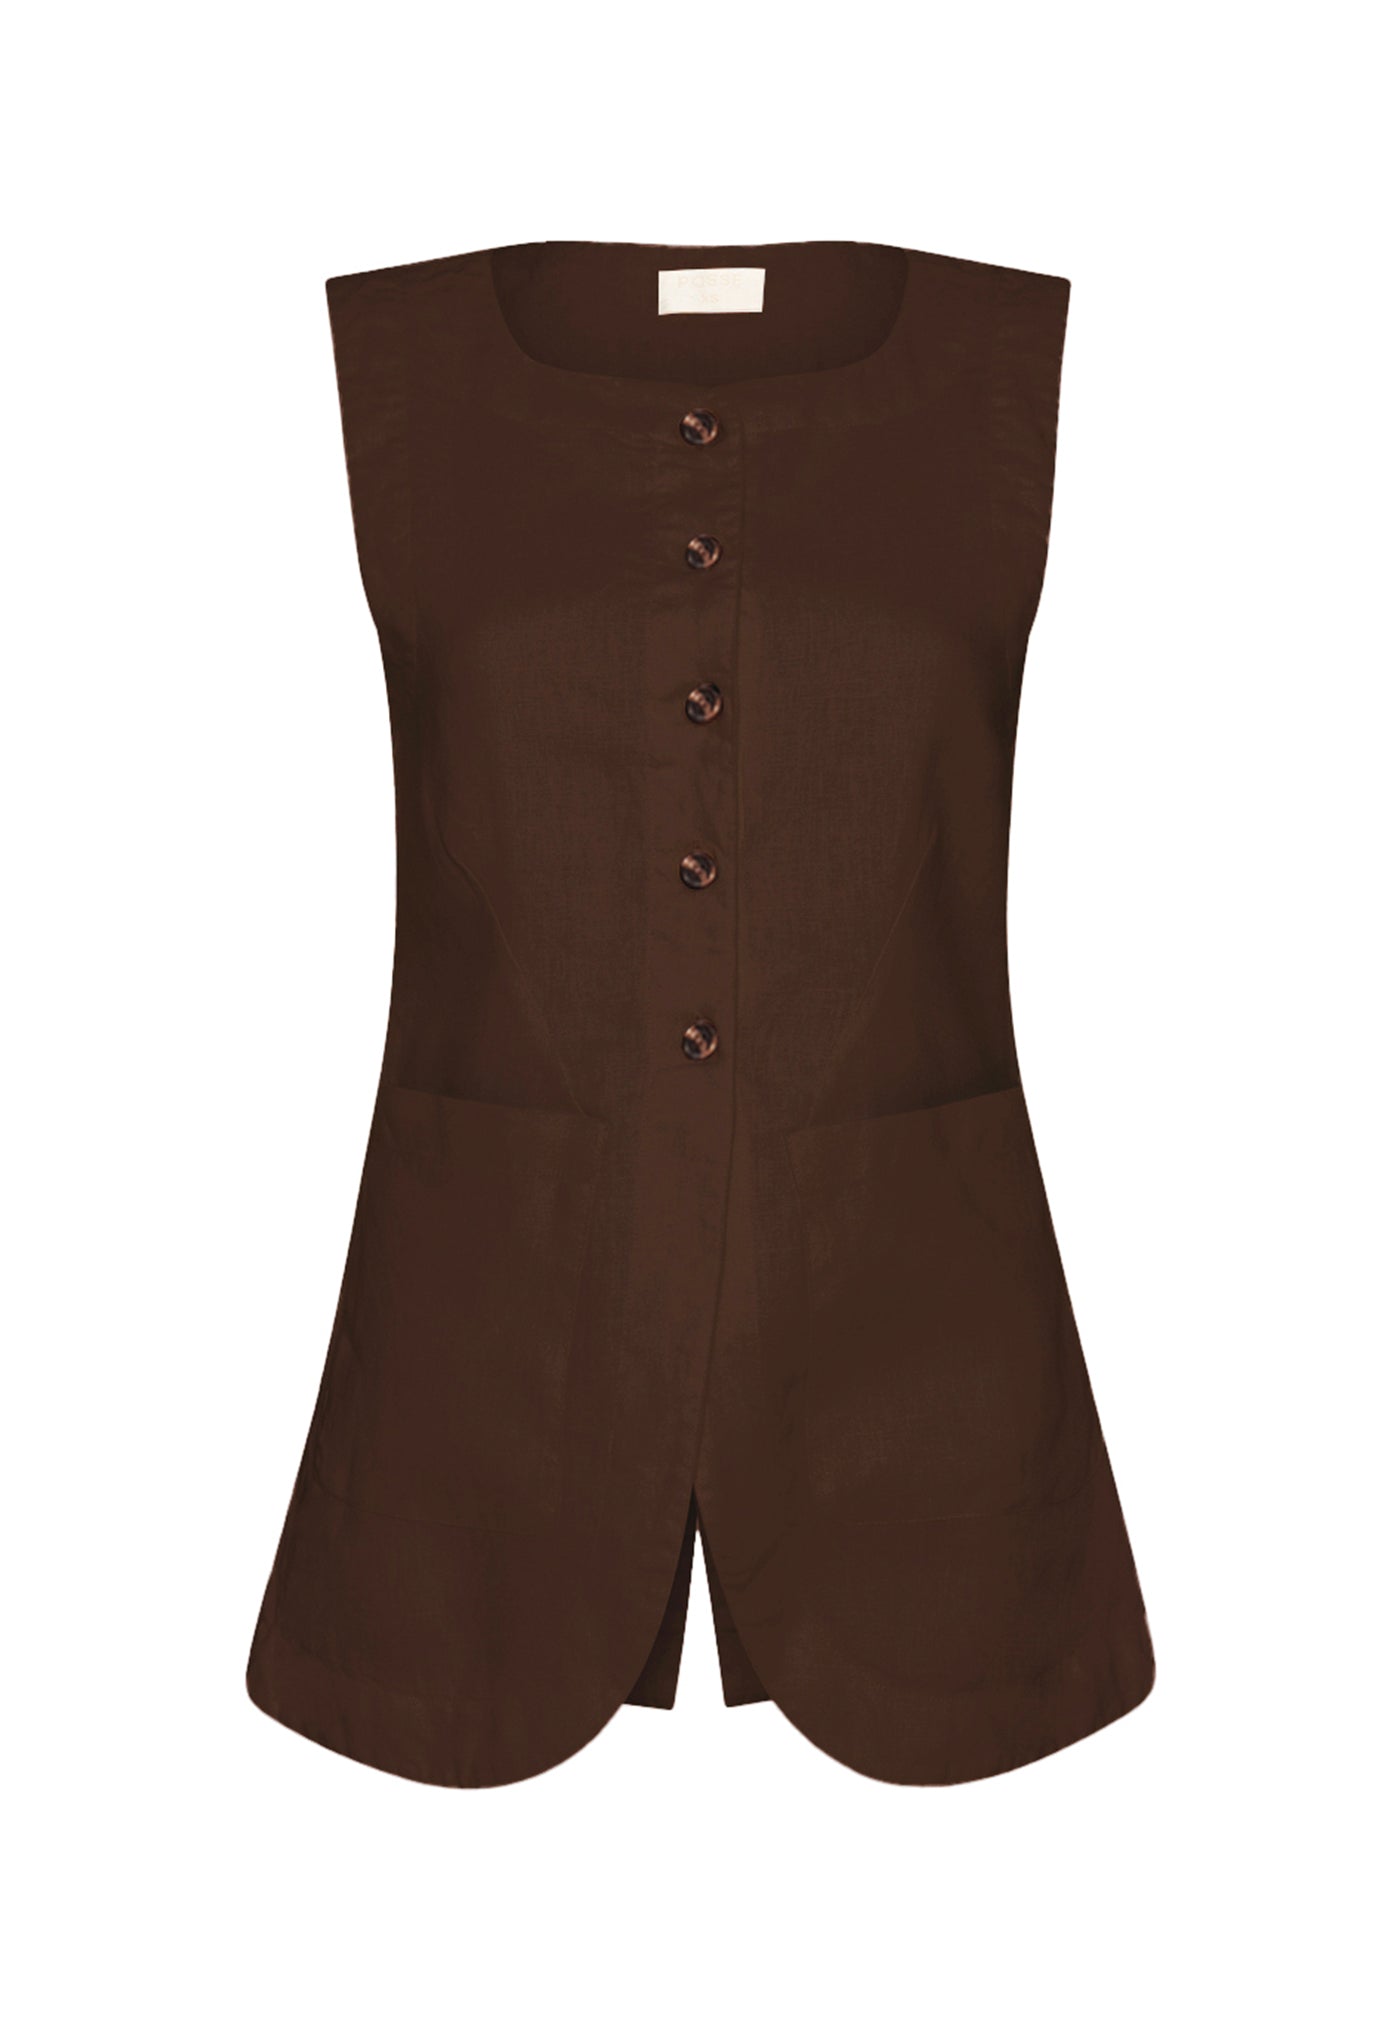 Emma Vest - Chocolate sold by Angel Divine